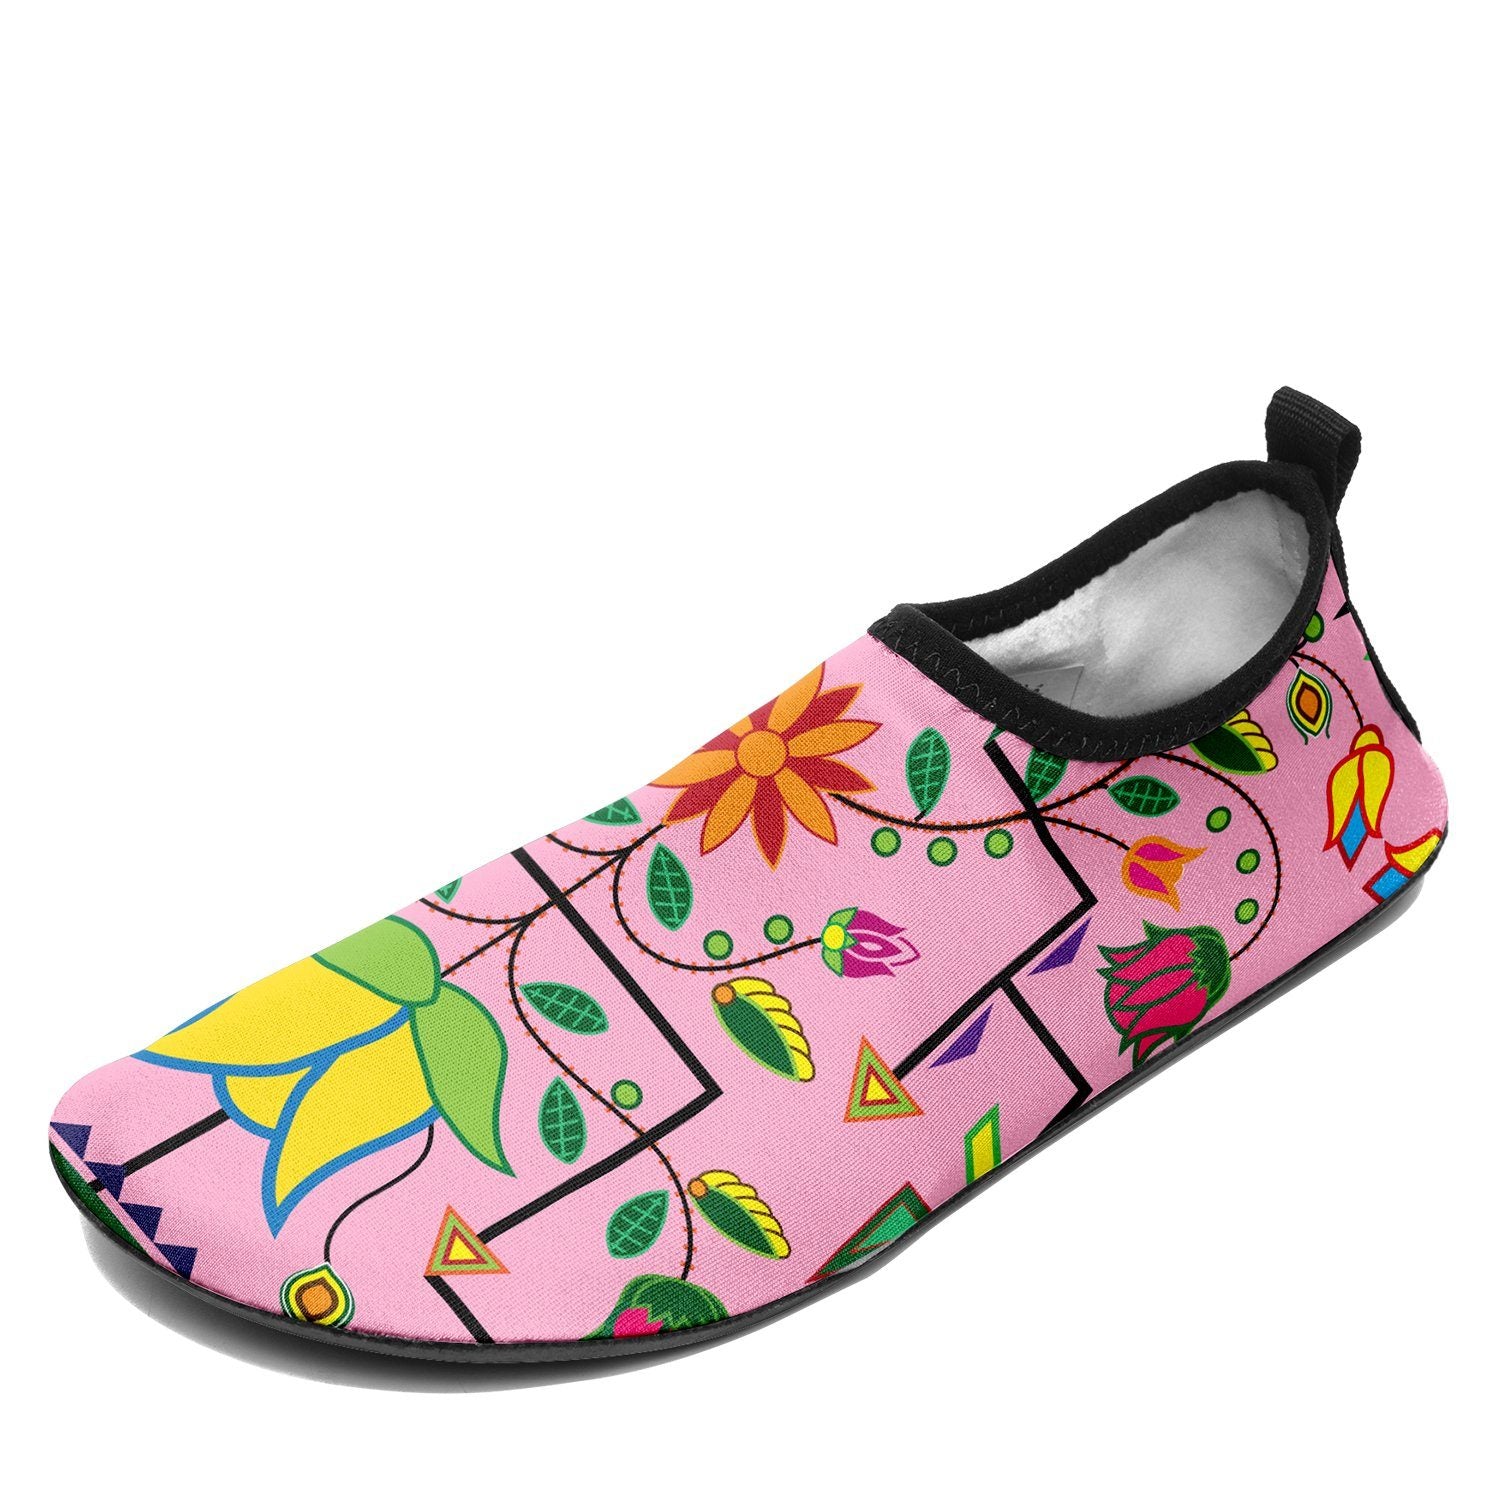 Geometric Floral Summer Sunset Sockamoccs Slip On Shoes 49 Dzine 